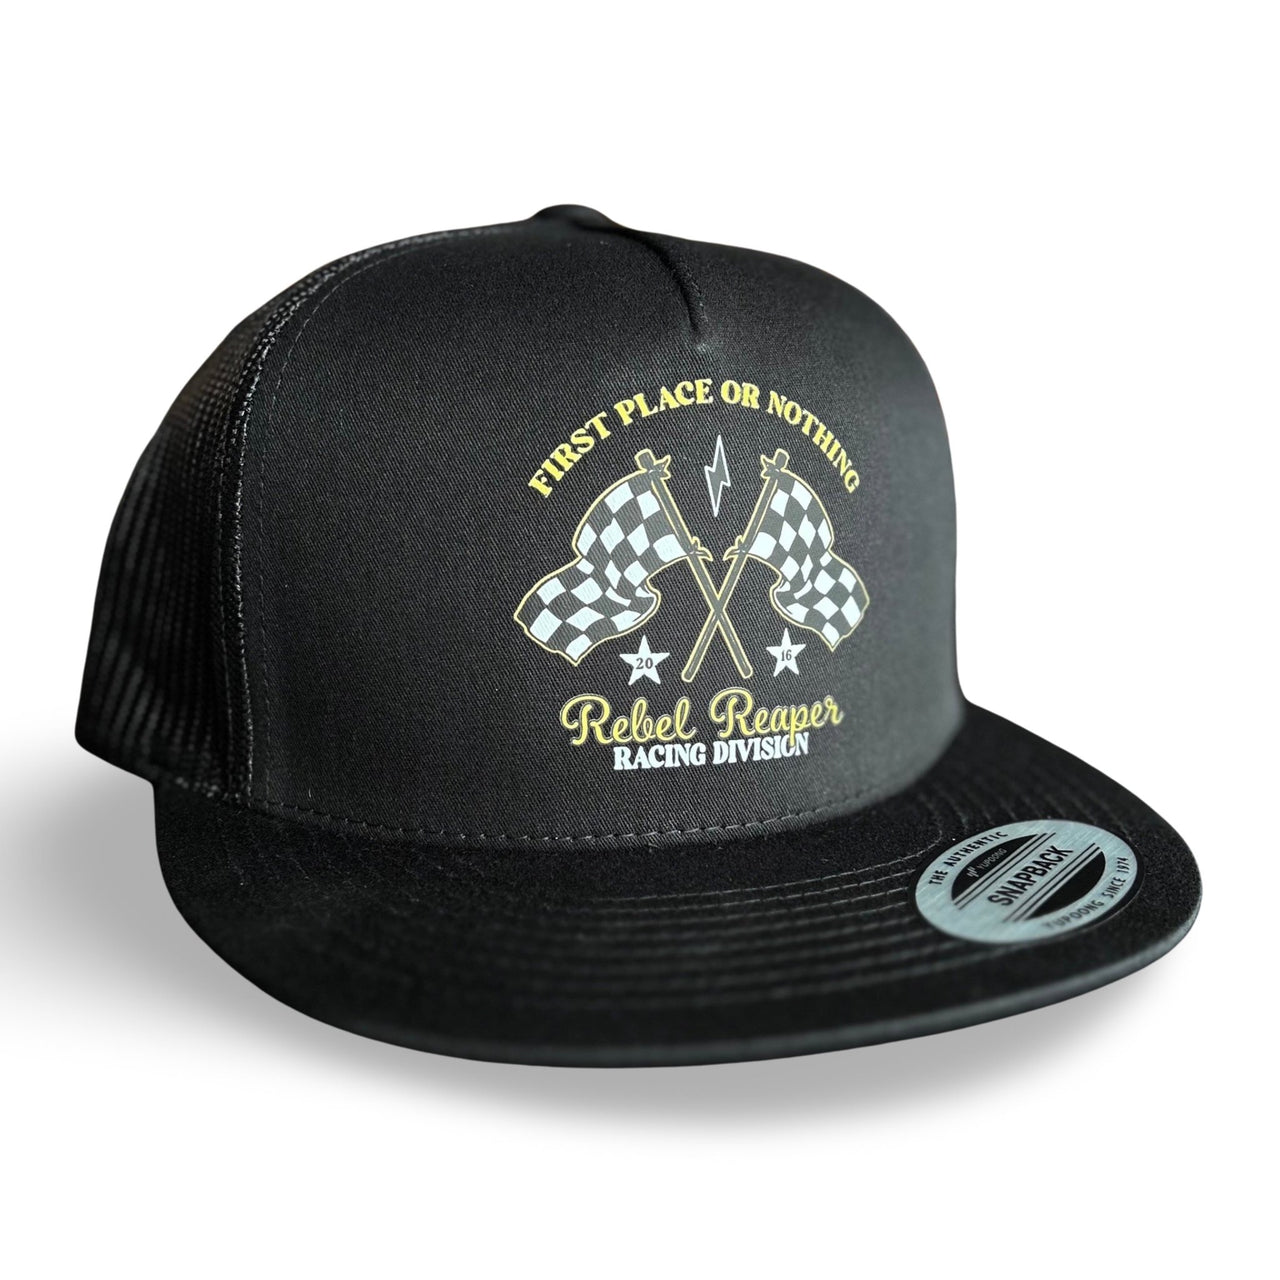 Racing Division Flag - Snapback Hat Black